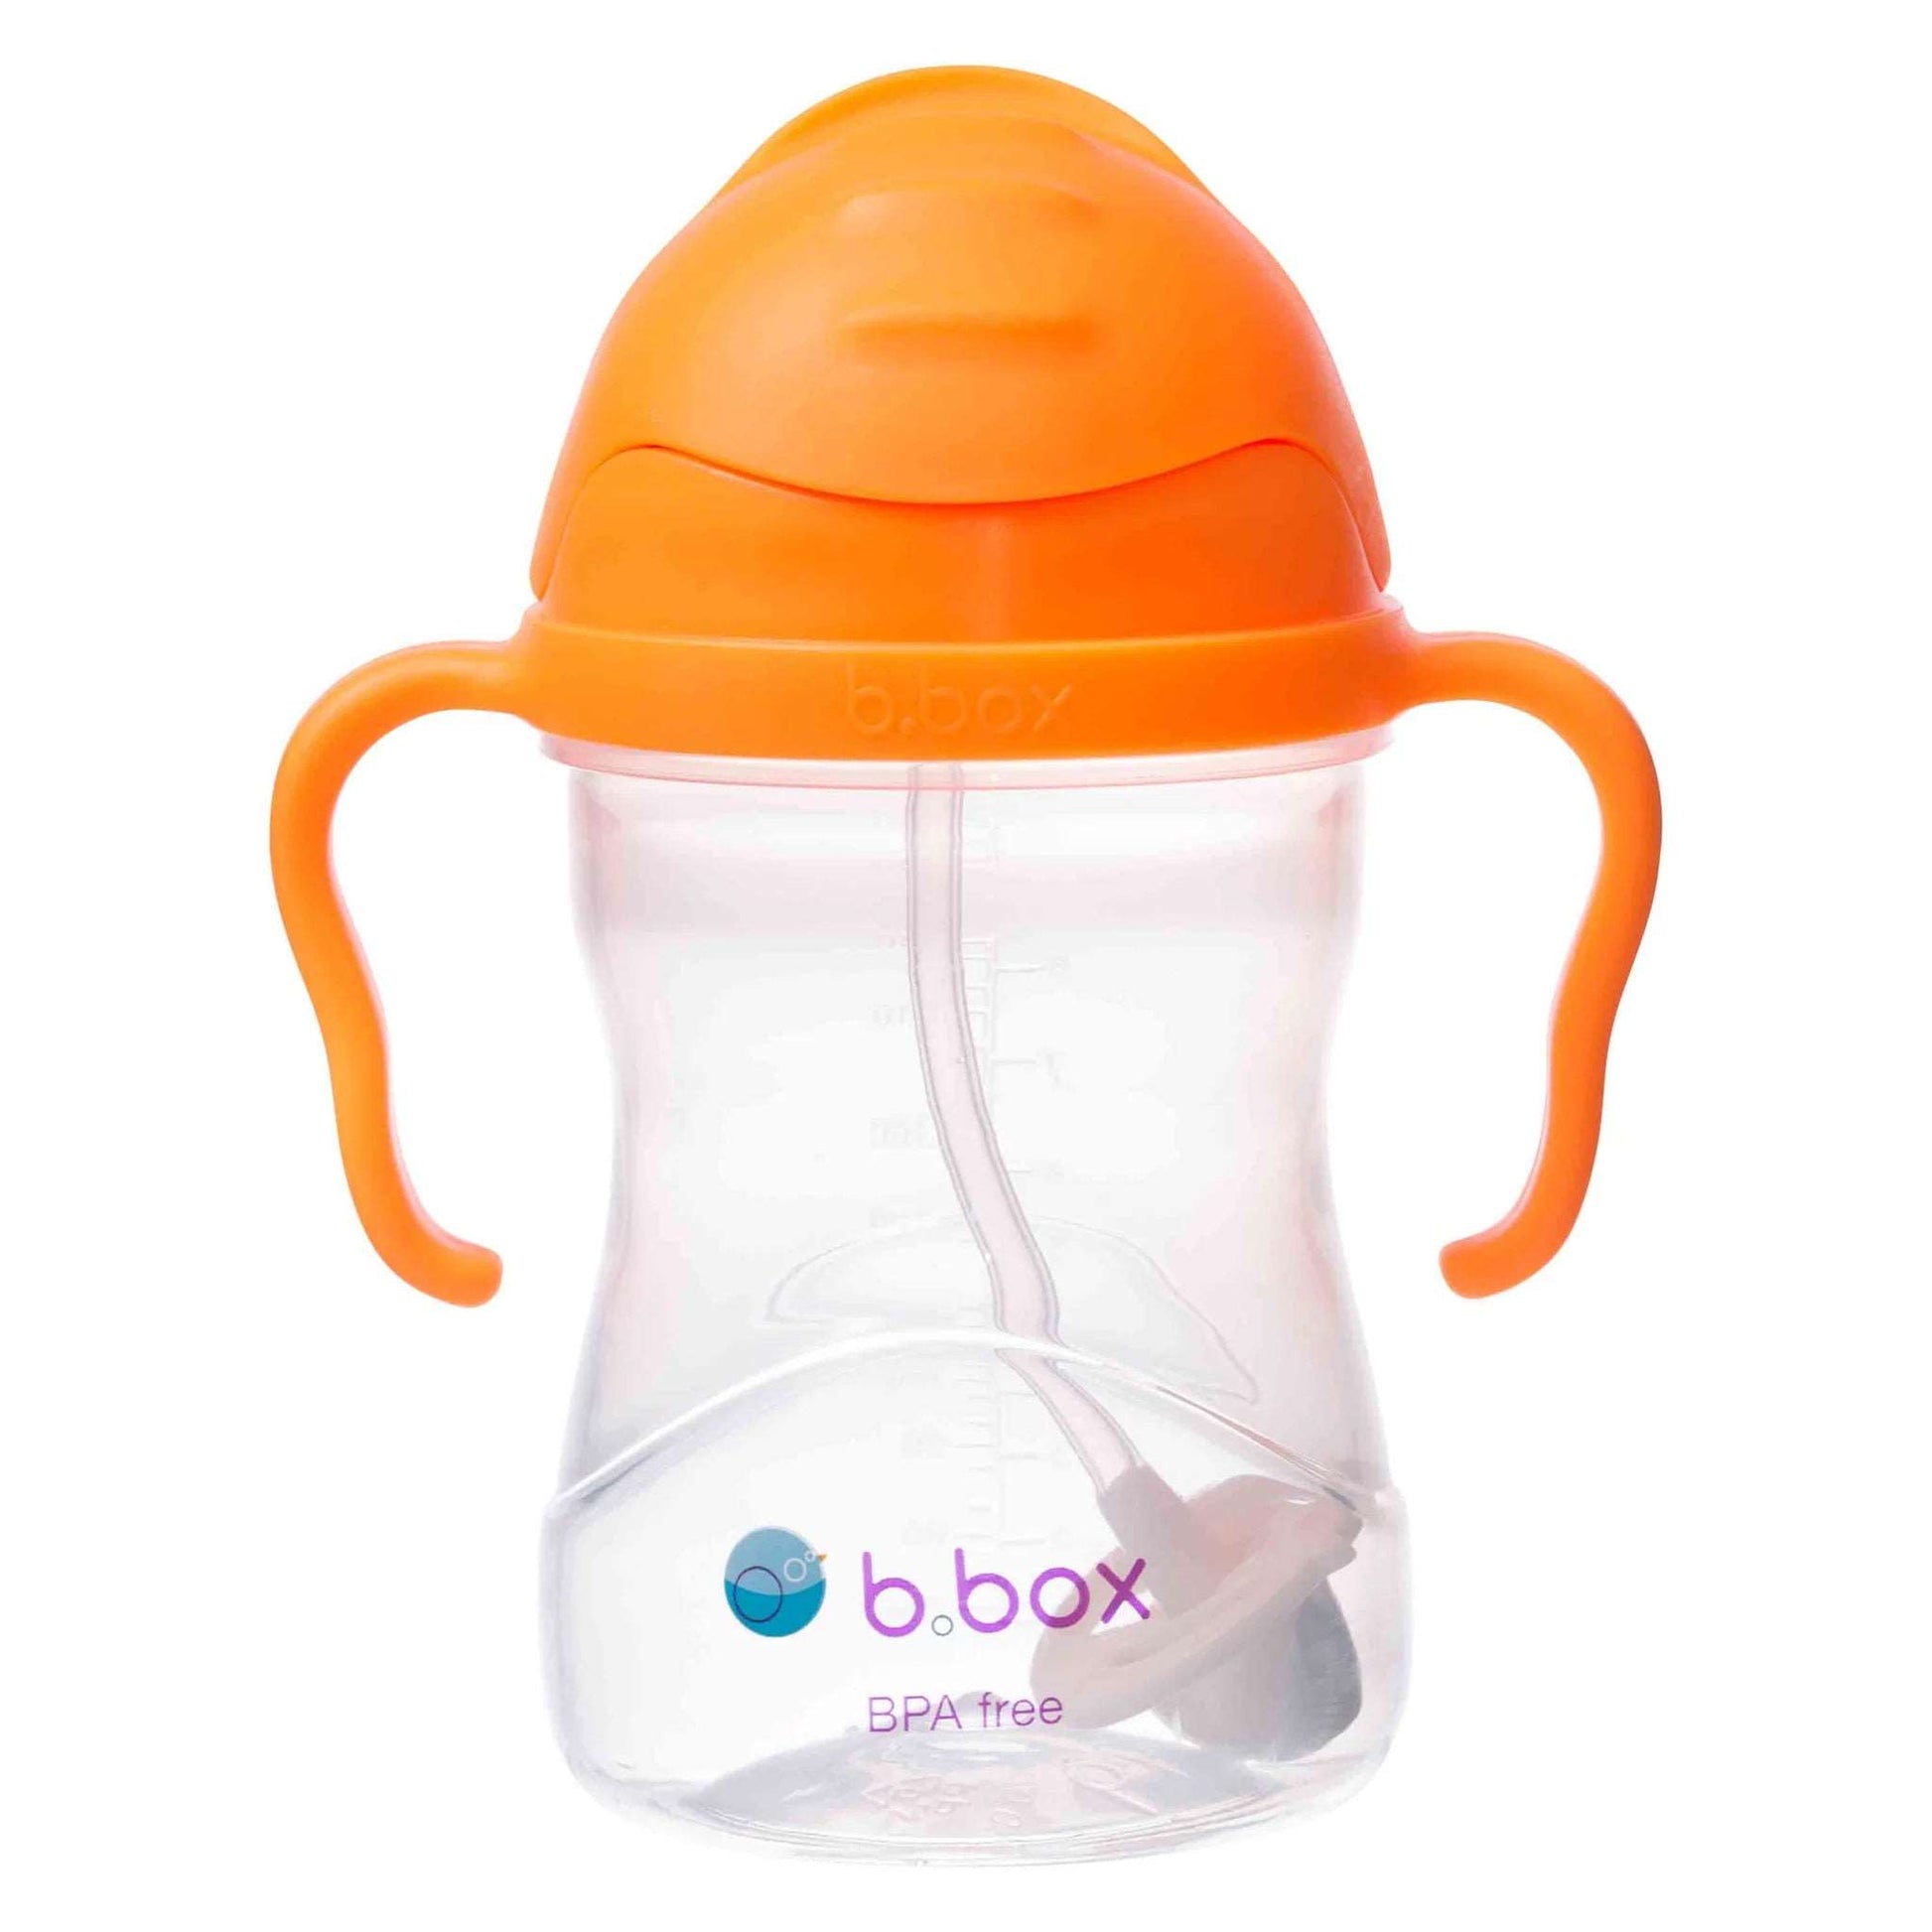 b.box Sippy Cup (Orange Zing)